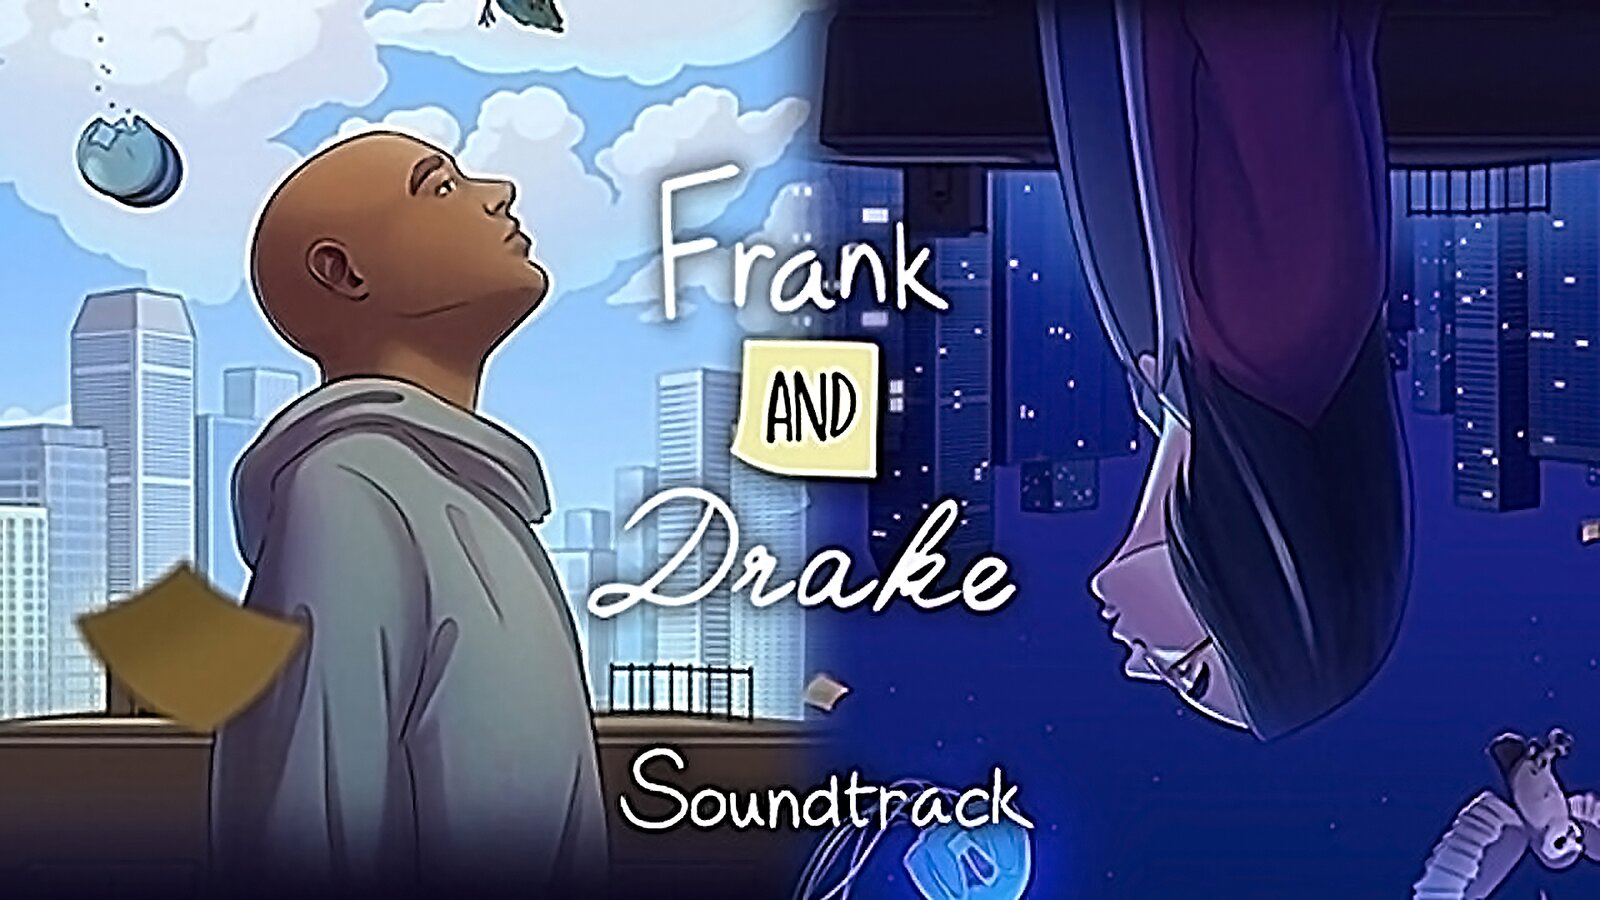 Frank and Drake - Soundtrack